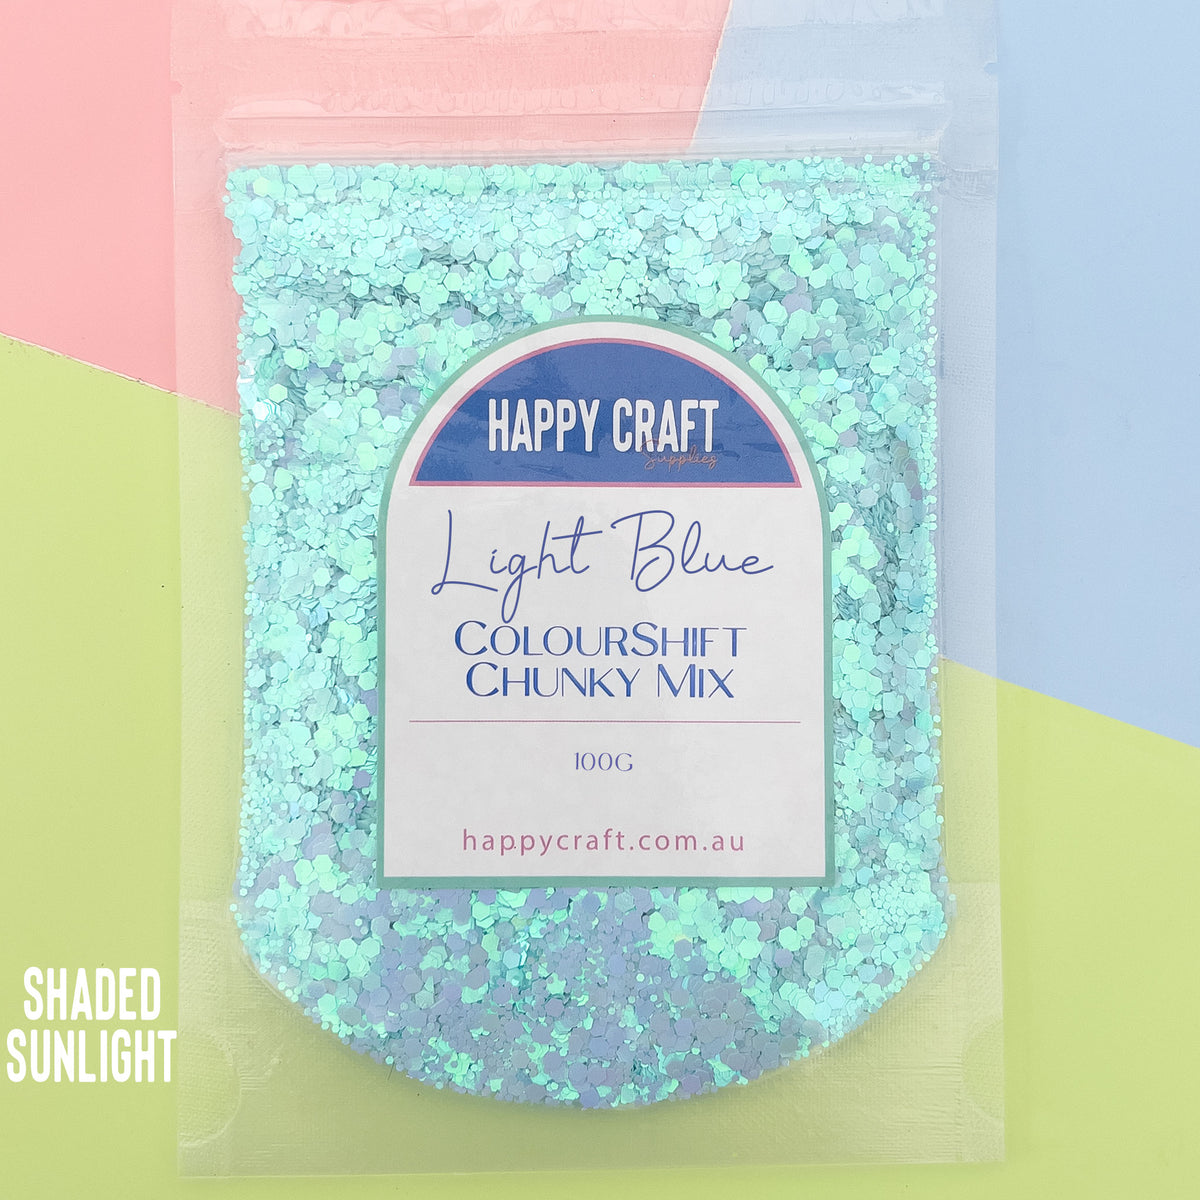 Chunky Glitter Colour Shift Mix - Light Blue